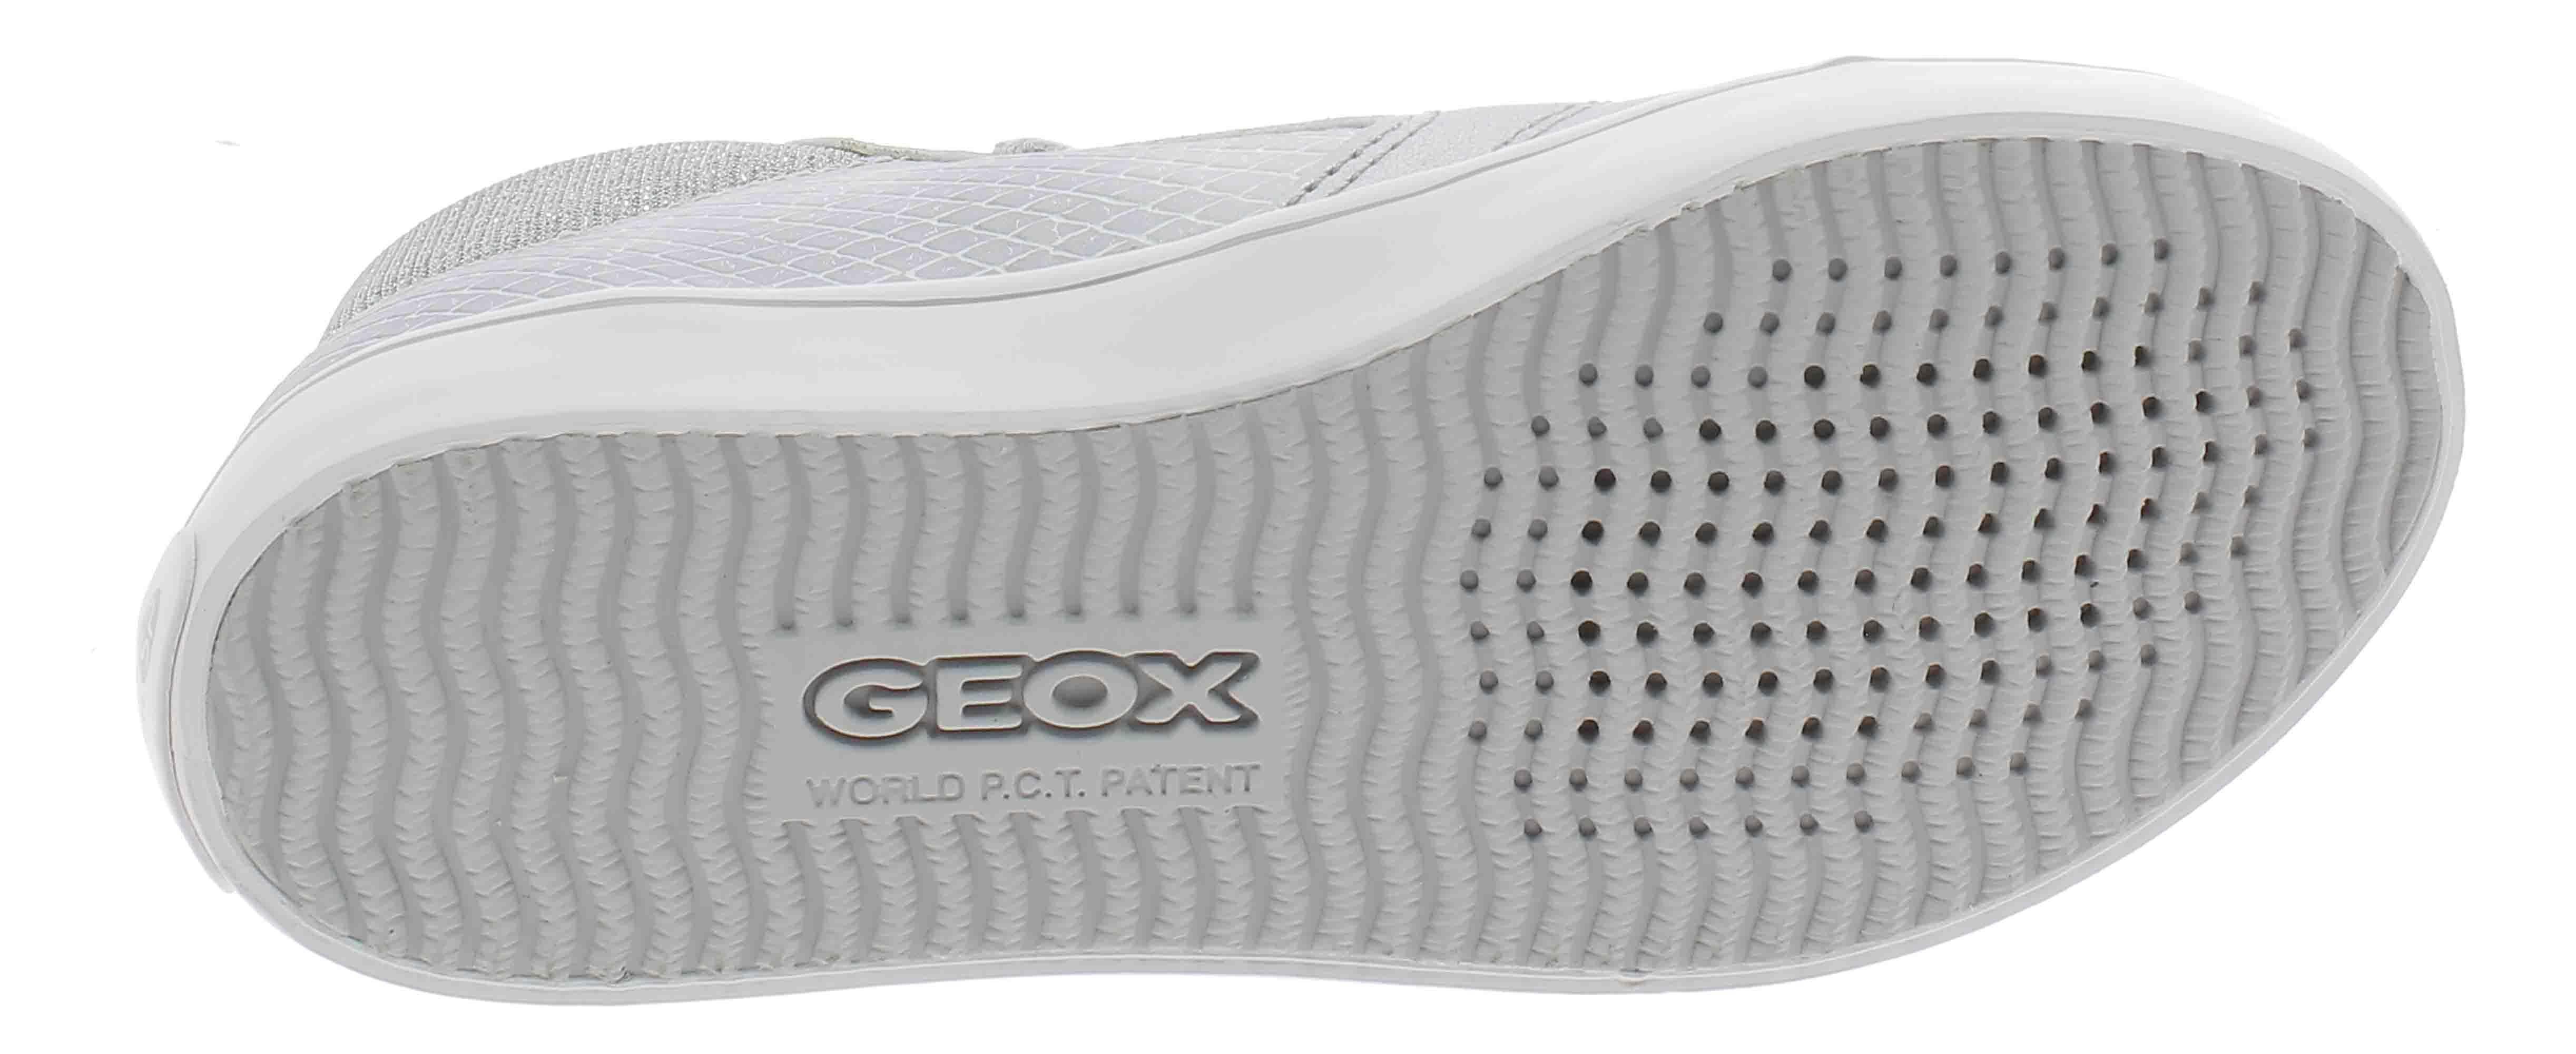 geox geox j gisli scarpe sportive bambina argento j924nec0434